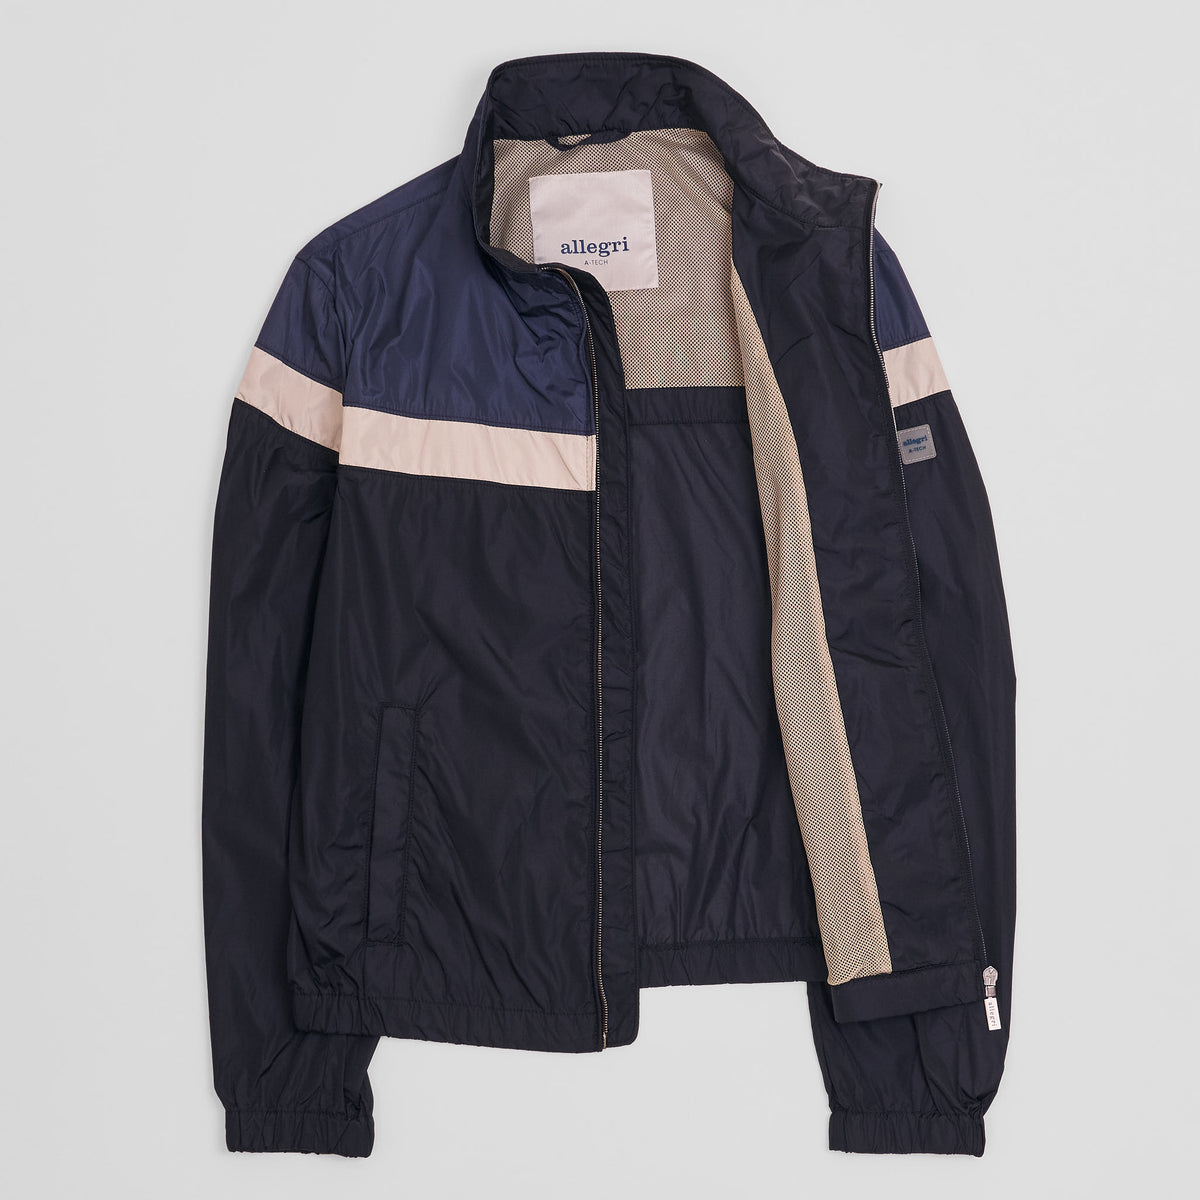 Allegri Italy 80&#39;s Style Sport Jacket A-Tech